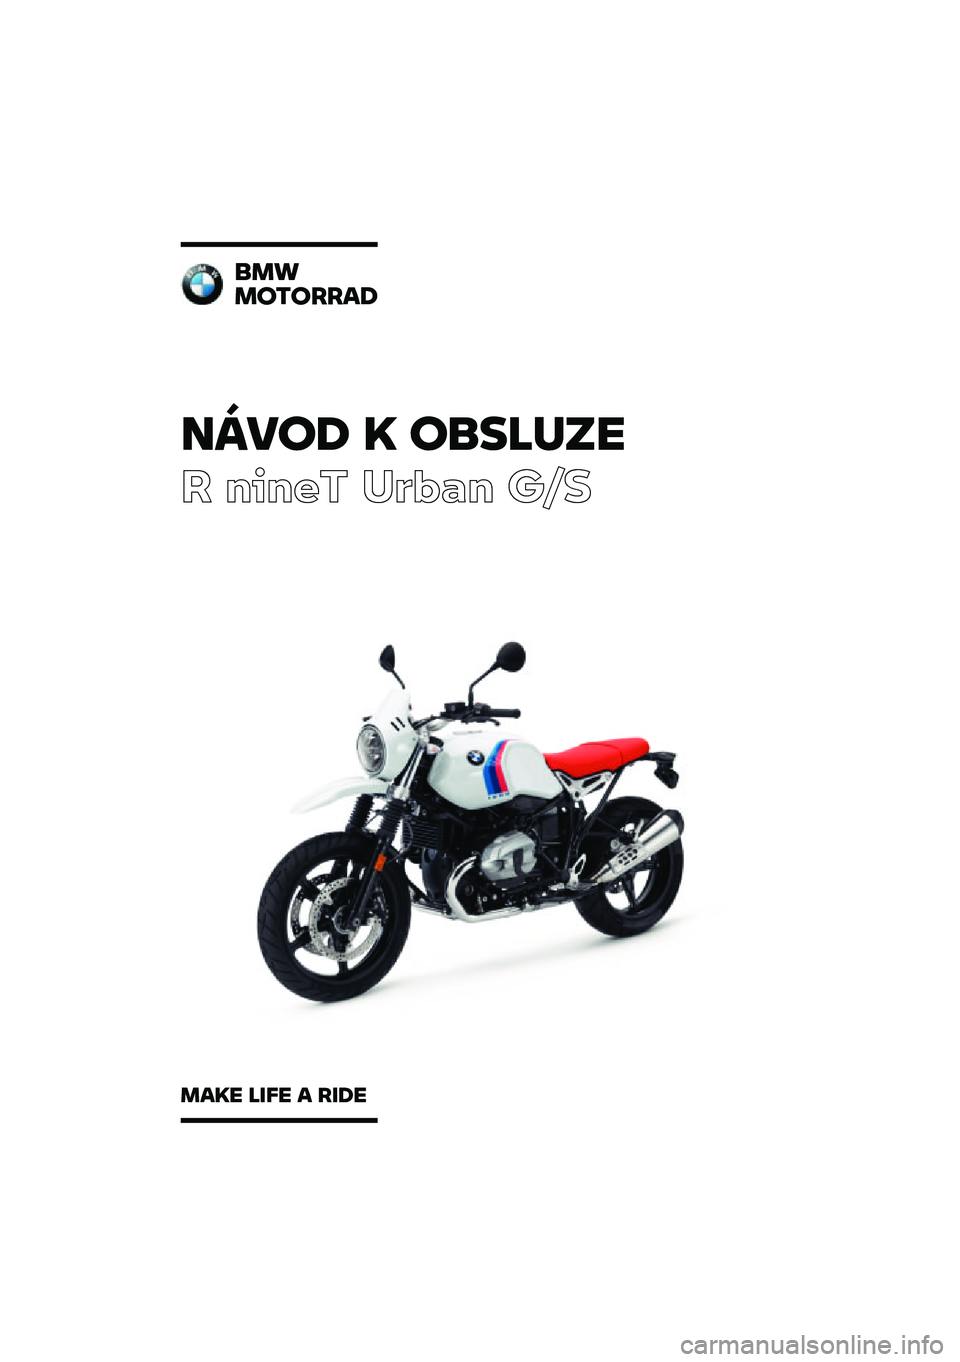 BMW MOTORRAD R NINE T URVAN G/S 2020  Návod k obsluze (in Czech) �����\b �	 ��
��\f�
��
� ����� ��\b�	�
� ��\f�
�
��
��������\b
���	� �\f��� � ���\b� 